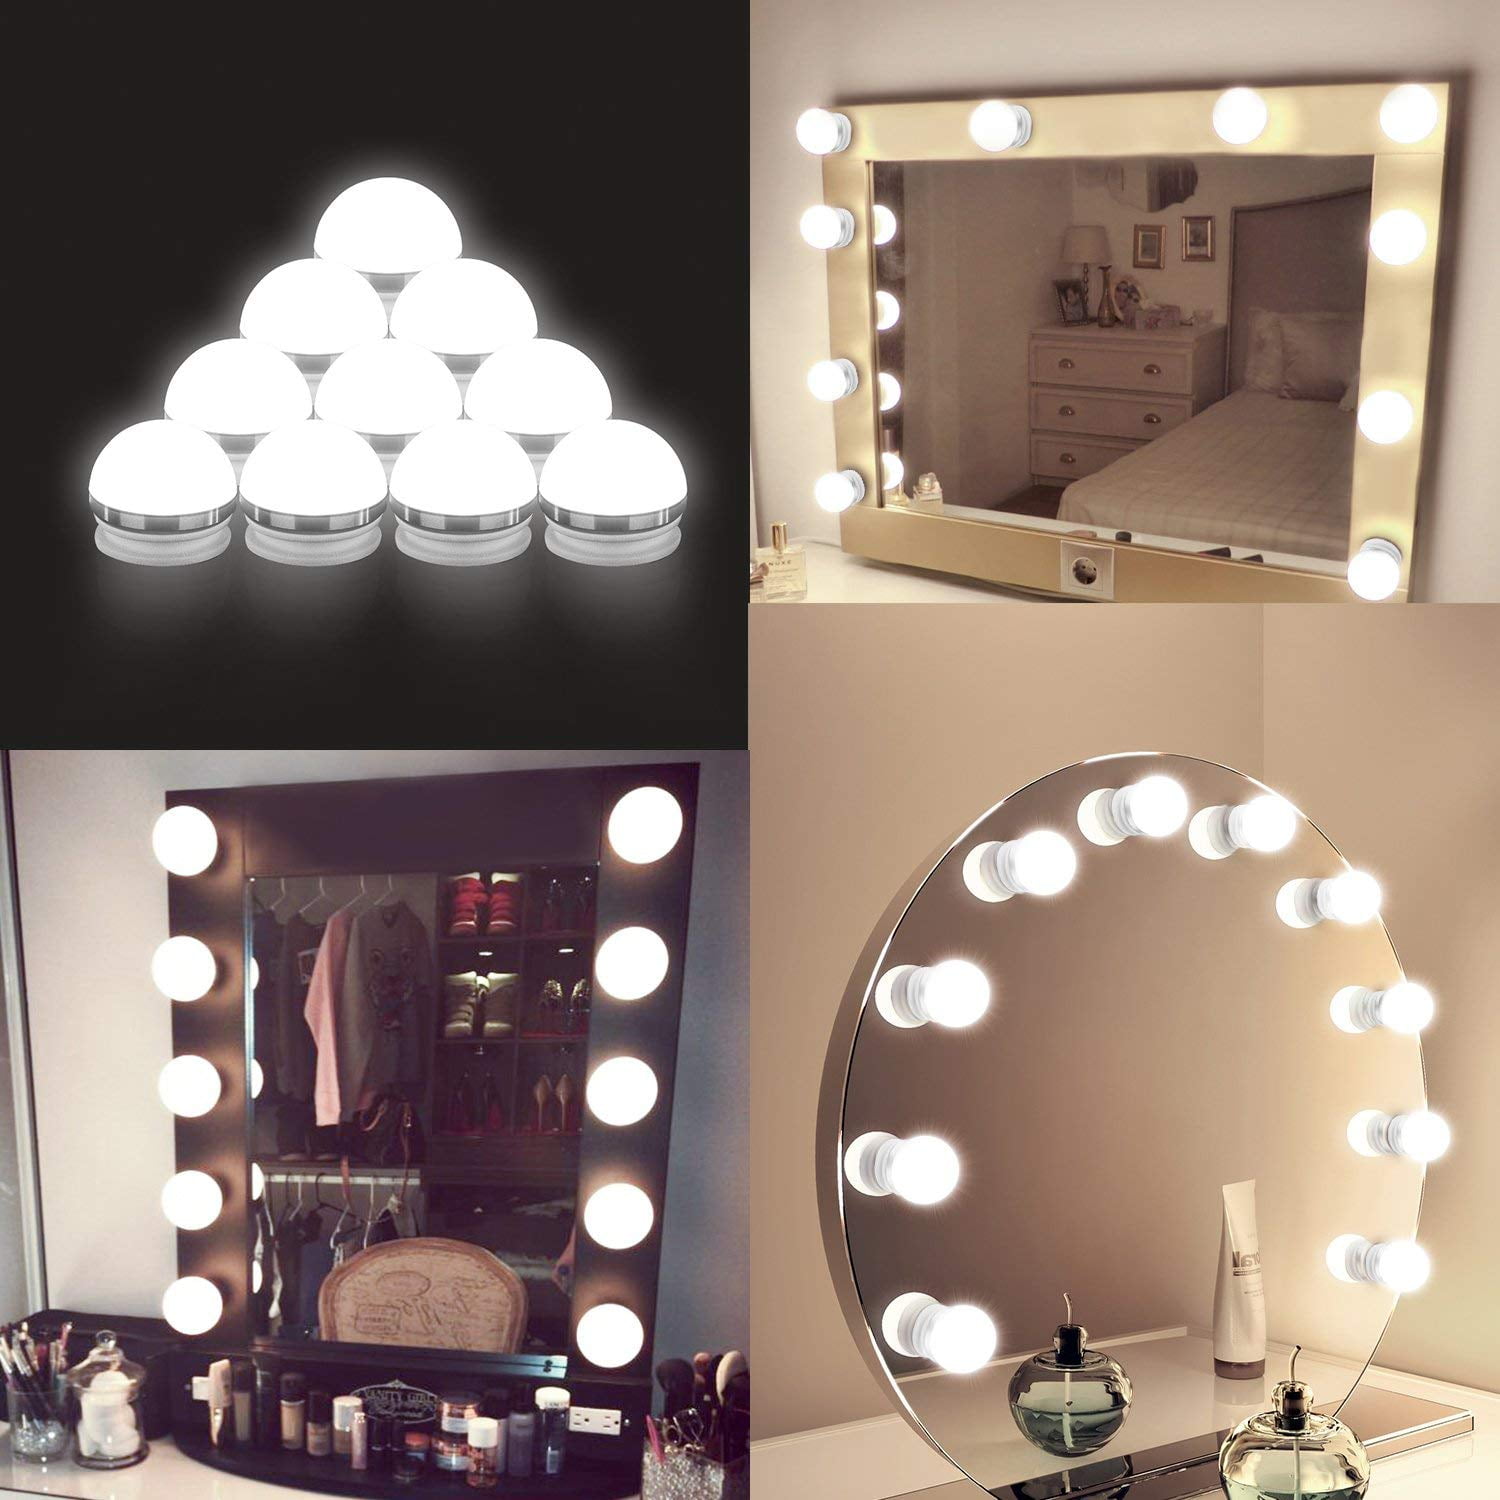 Vanity Lights For Mirror Diy Hollywood, Vanity Mirror With Lights And Desk Diy